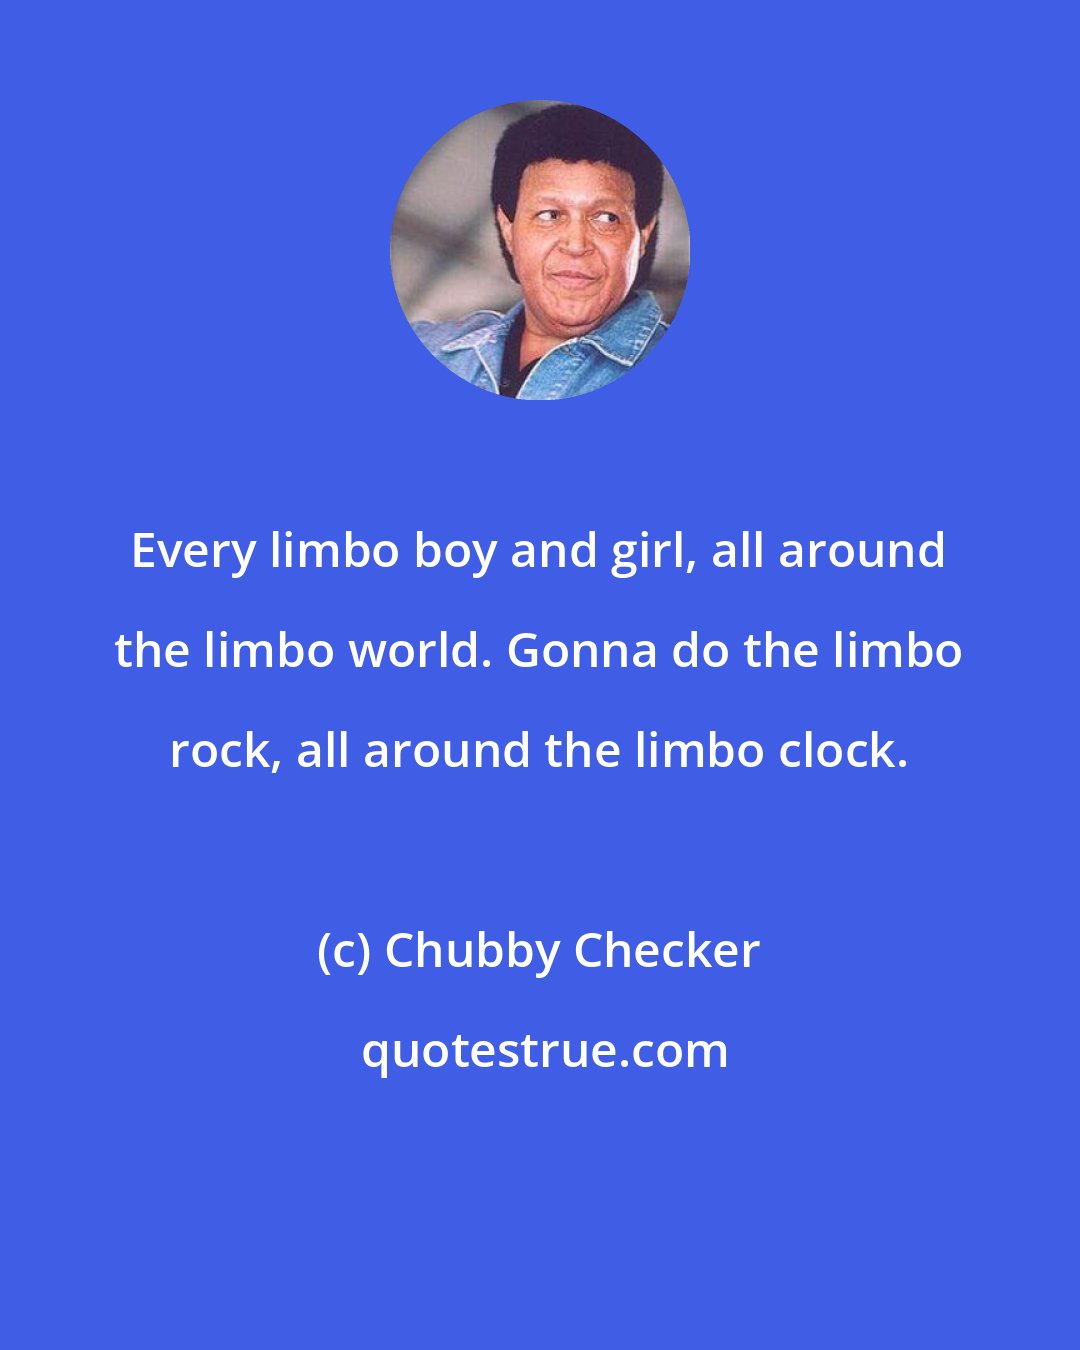 Chubby Checker: Every limbo boy and girl, all around the limbo world. Gonna do the limbo rock, all around the limbo clock.